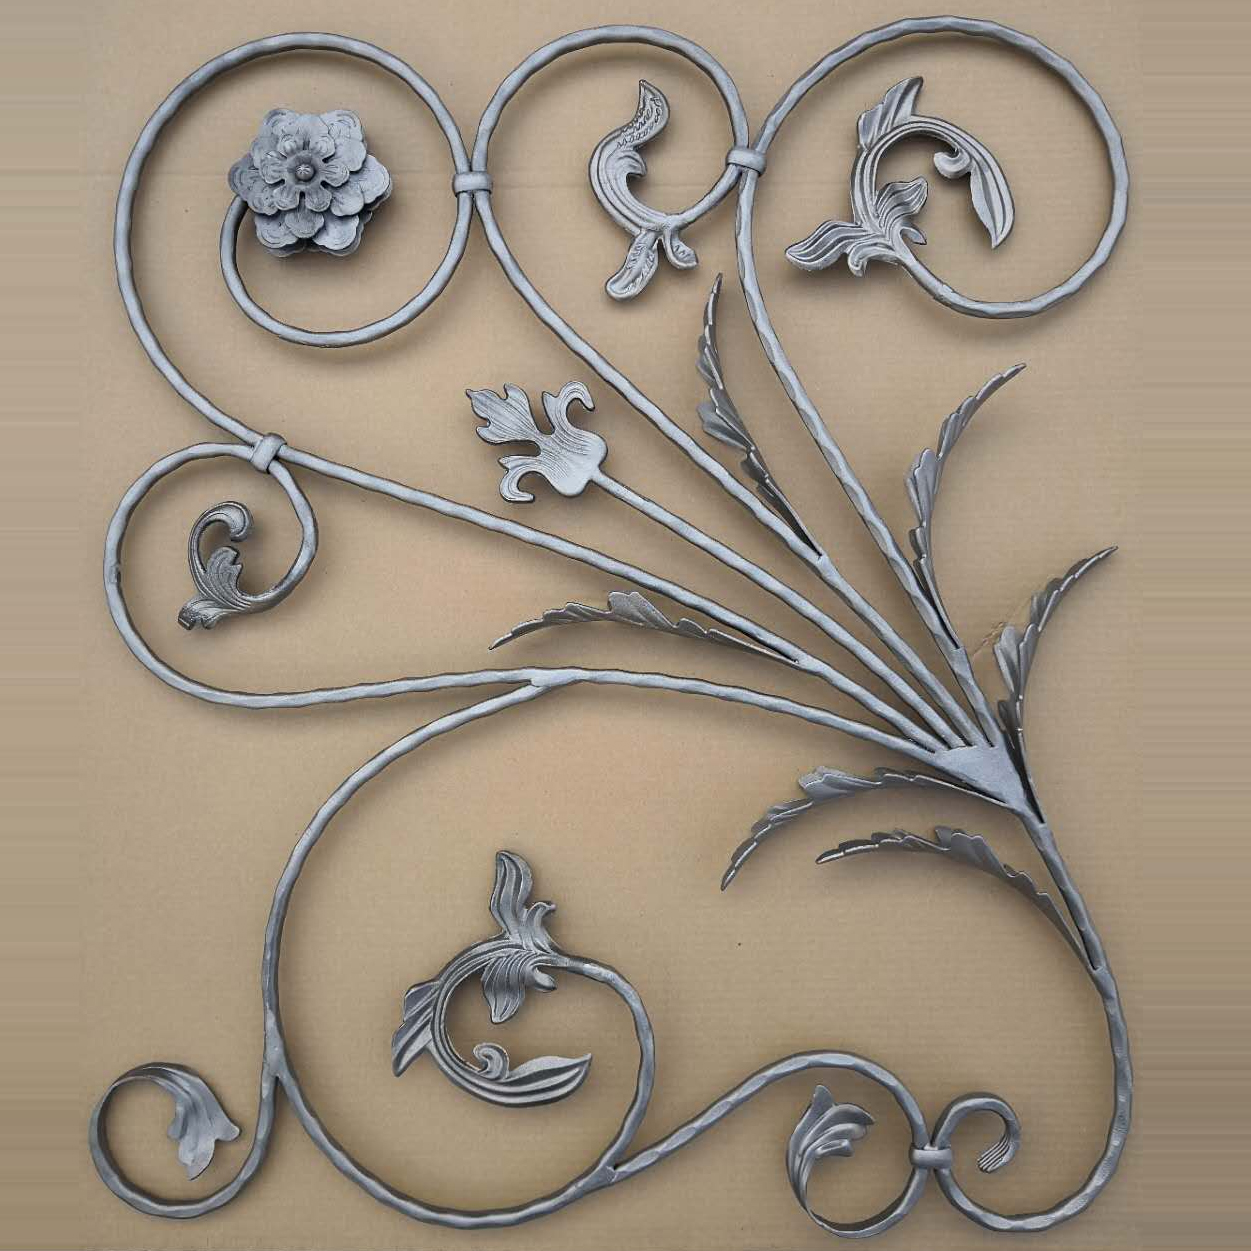 Wrought Iron Gate Decorative Ornaments Panels For Wrought iron Gate railing Or fence decoration Ornament